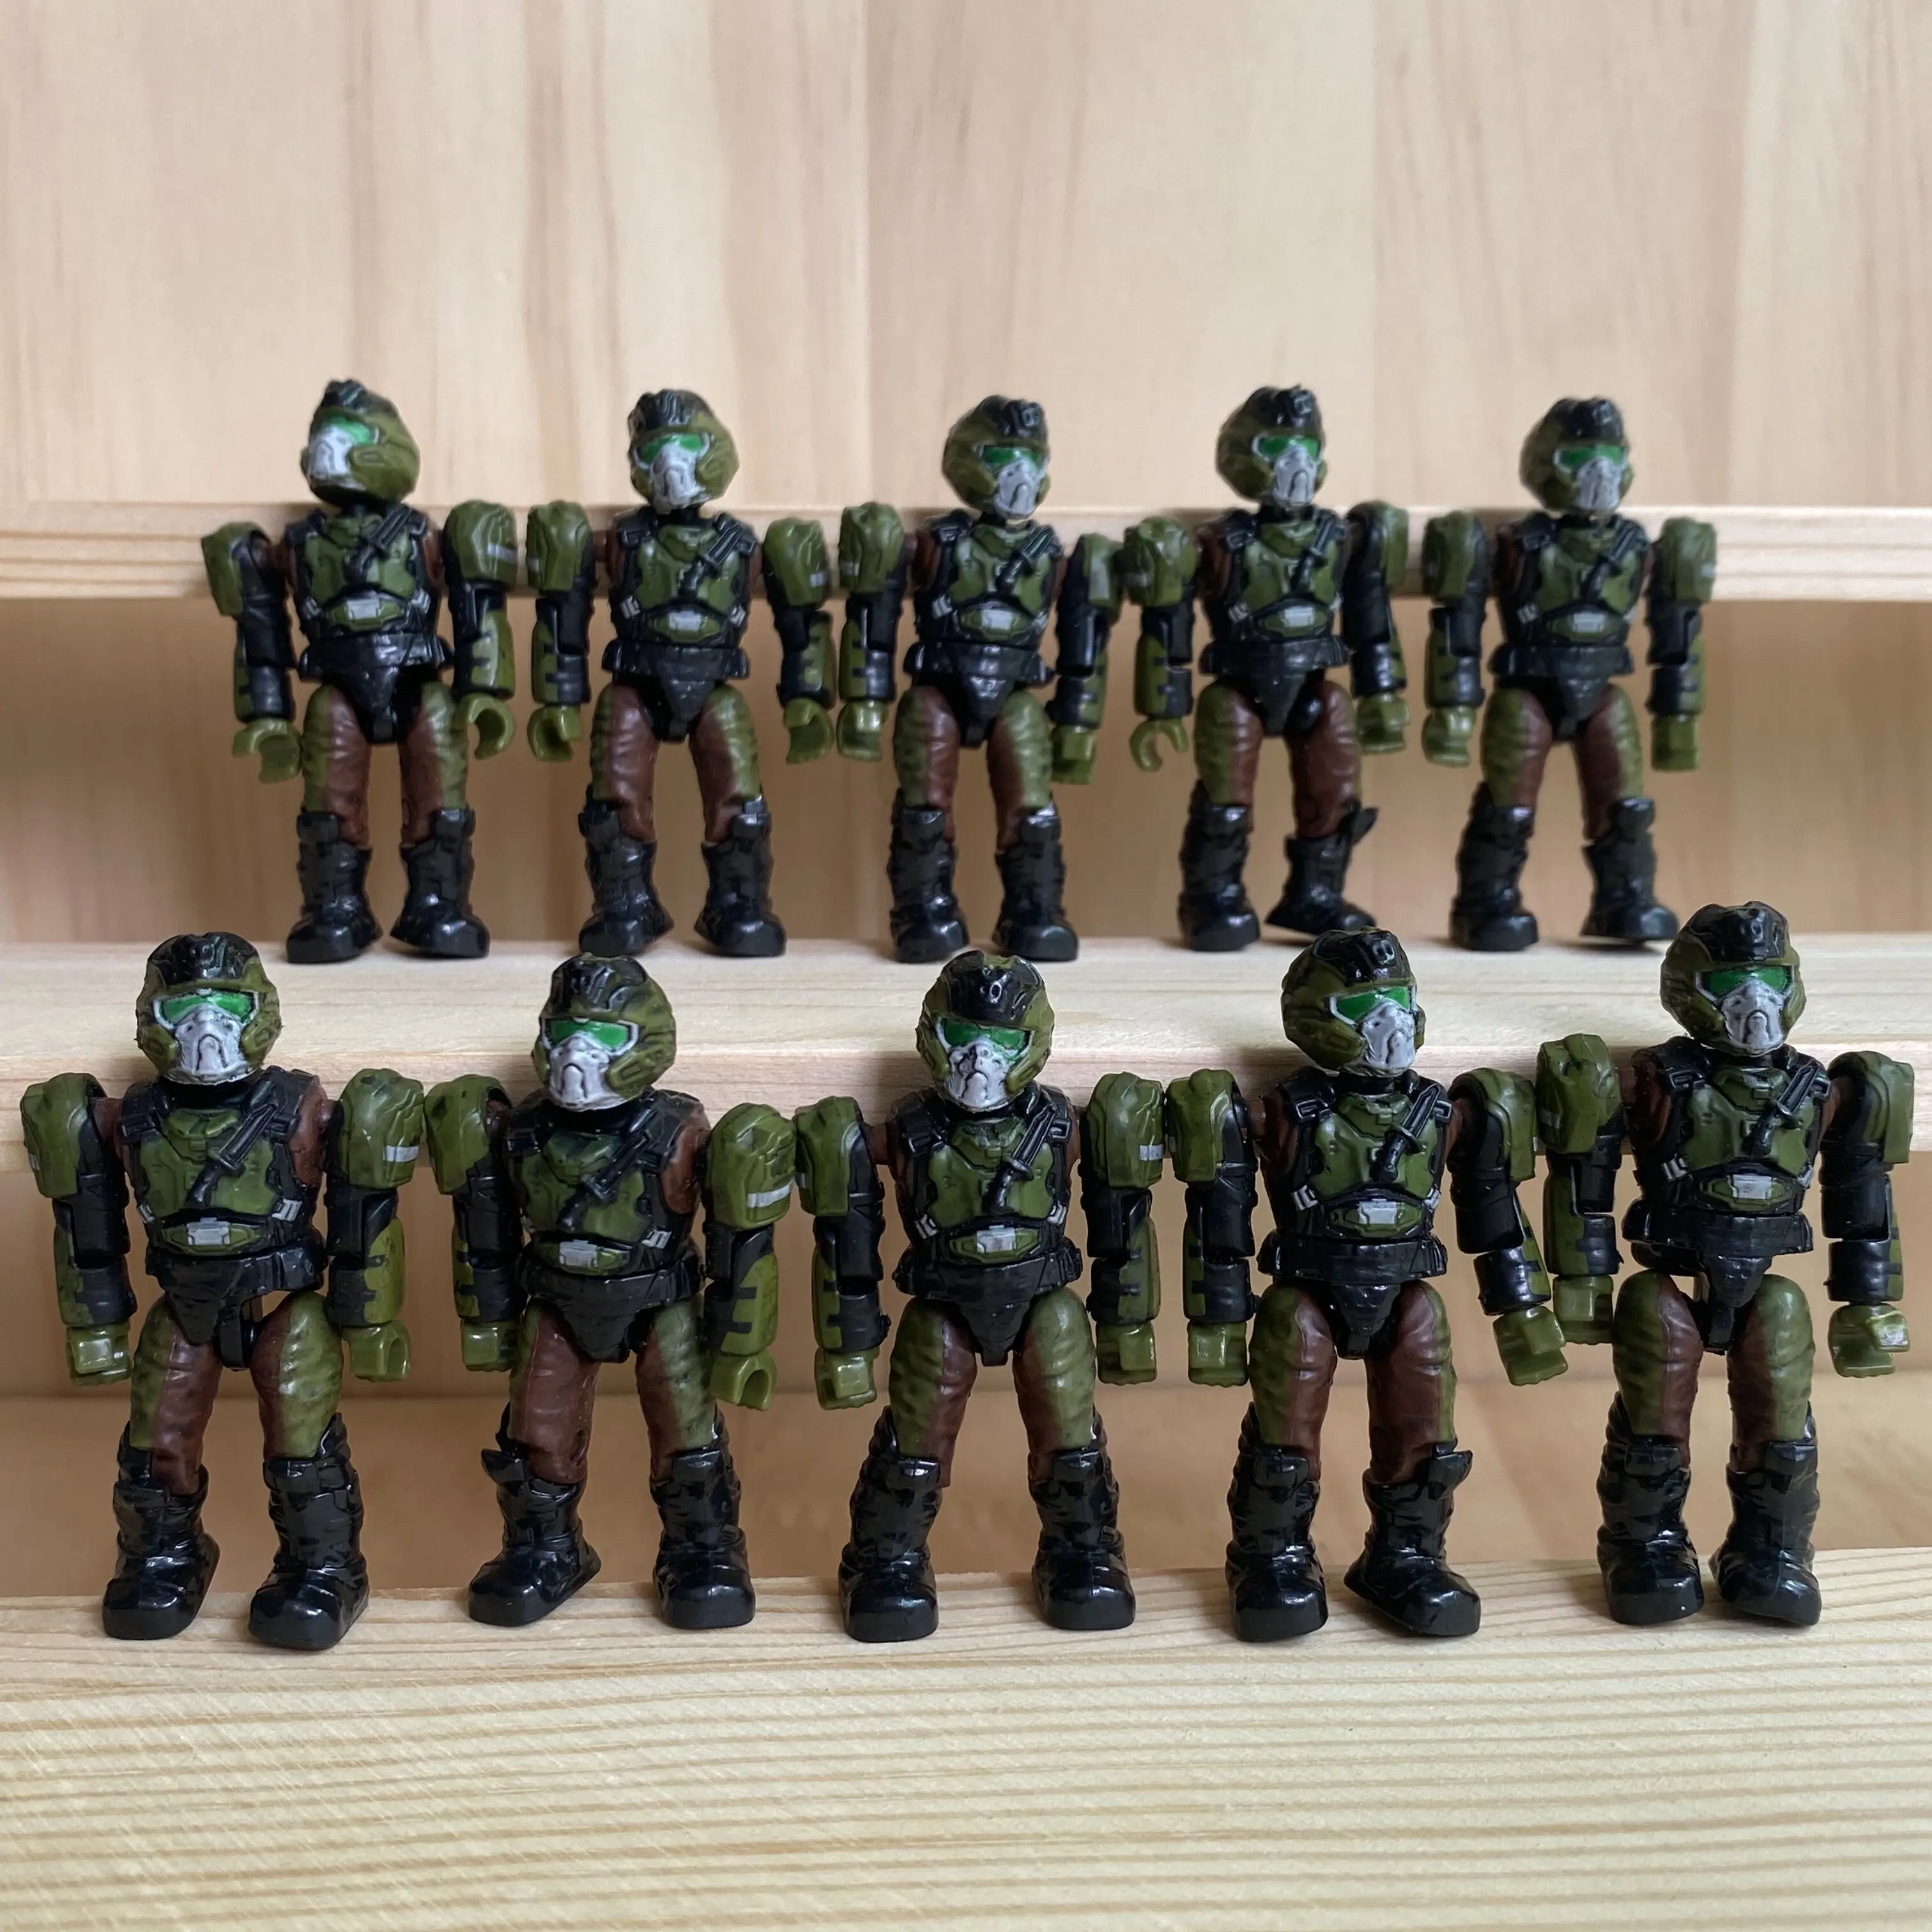 

Lot of 10pcs 2INCH Mega Bloks Construx Halo UNSC SPARTAN MASTER CHIEF Figures toys